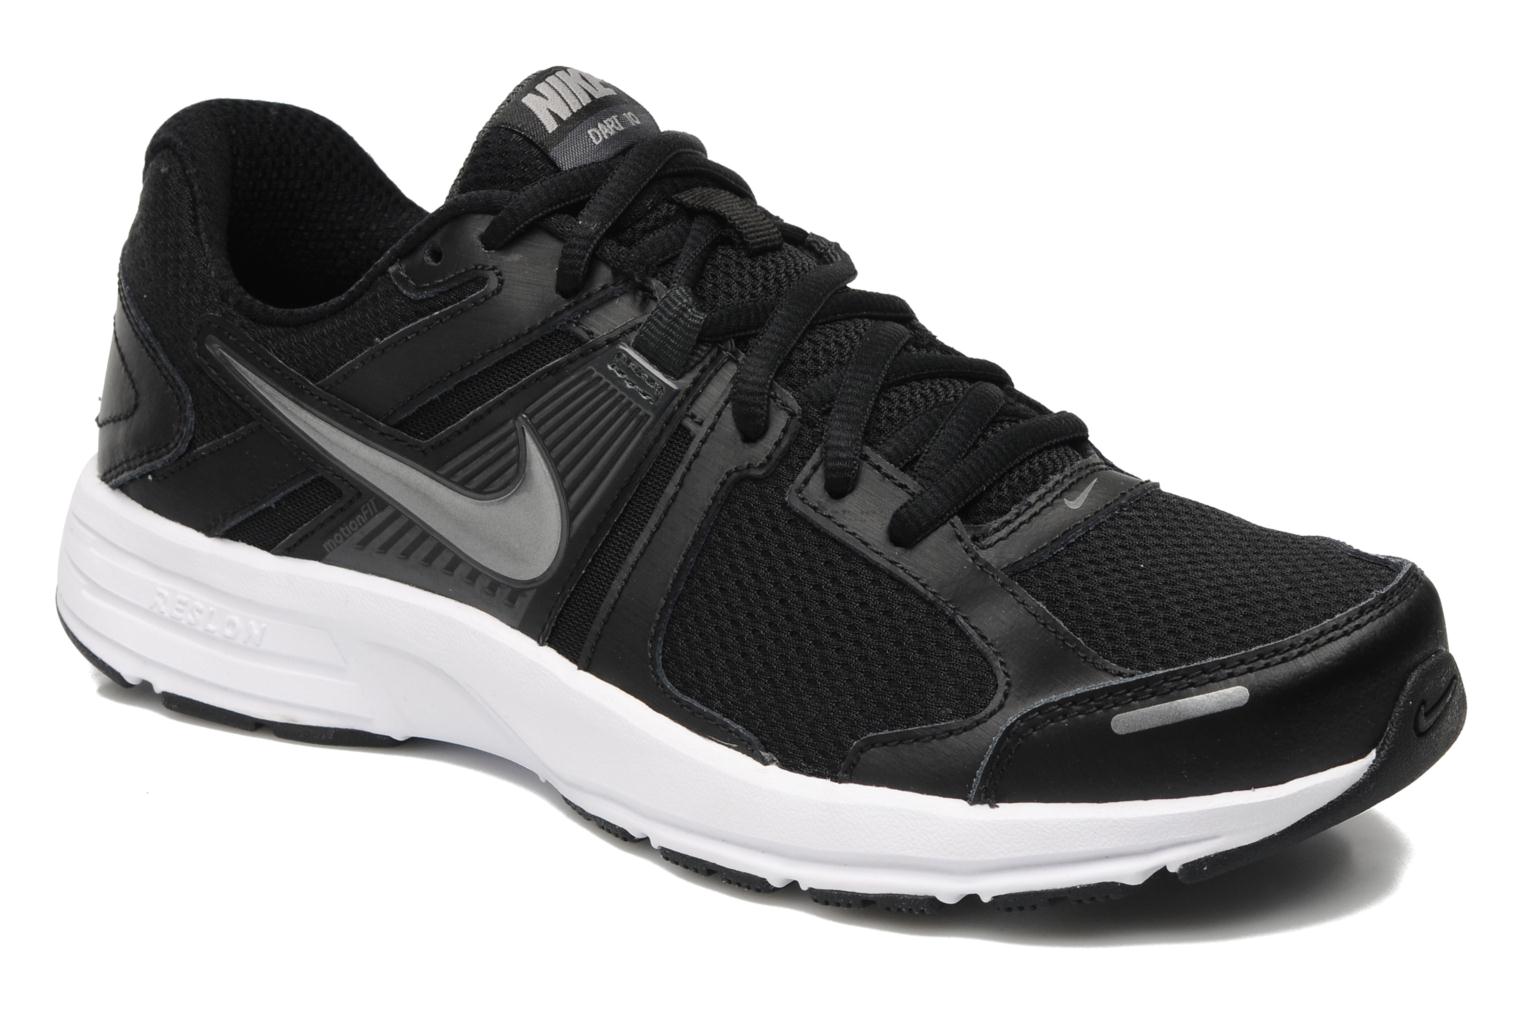 Nike Dart 10 Sport shoes in Black at Sarenza.co.uk (158373)